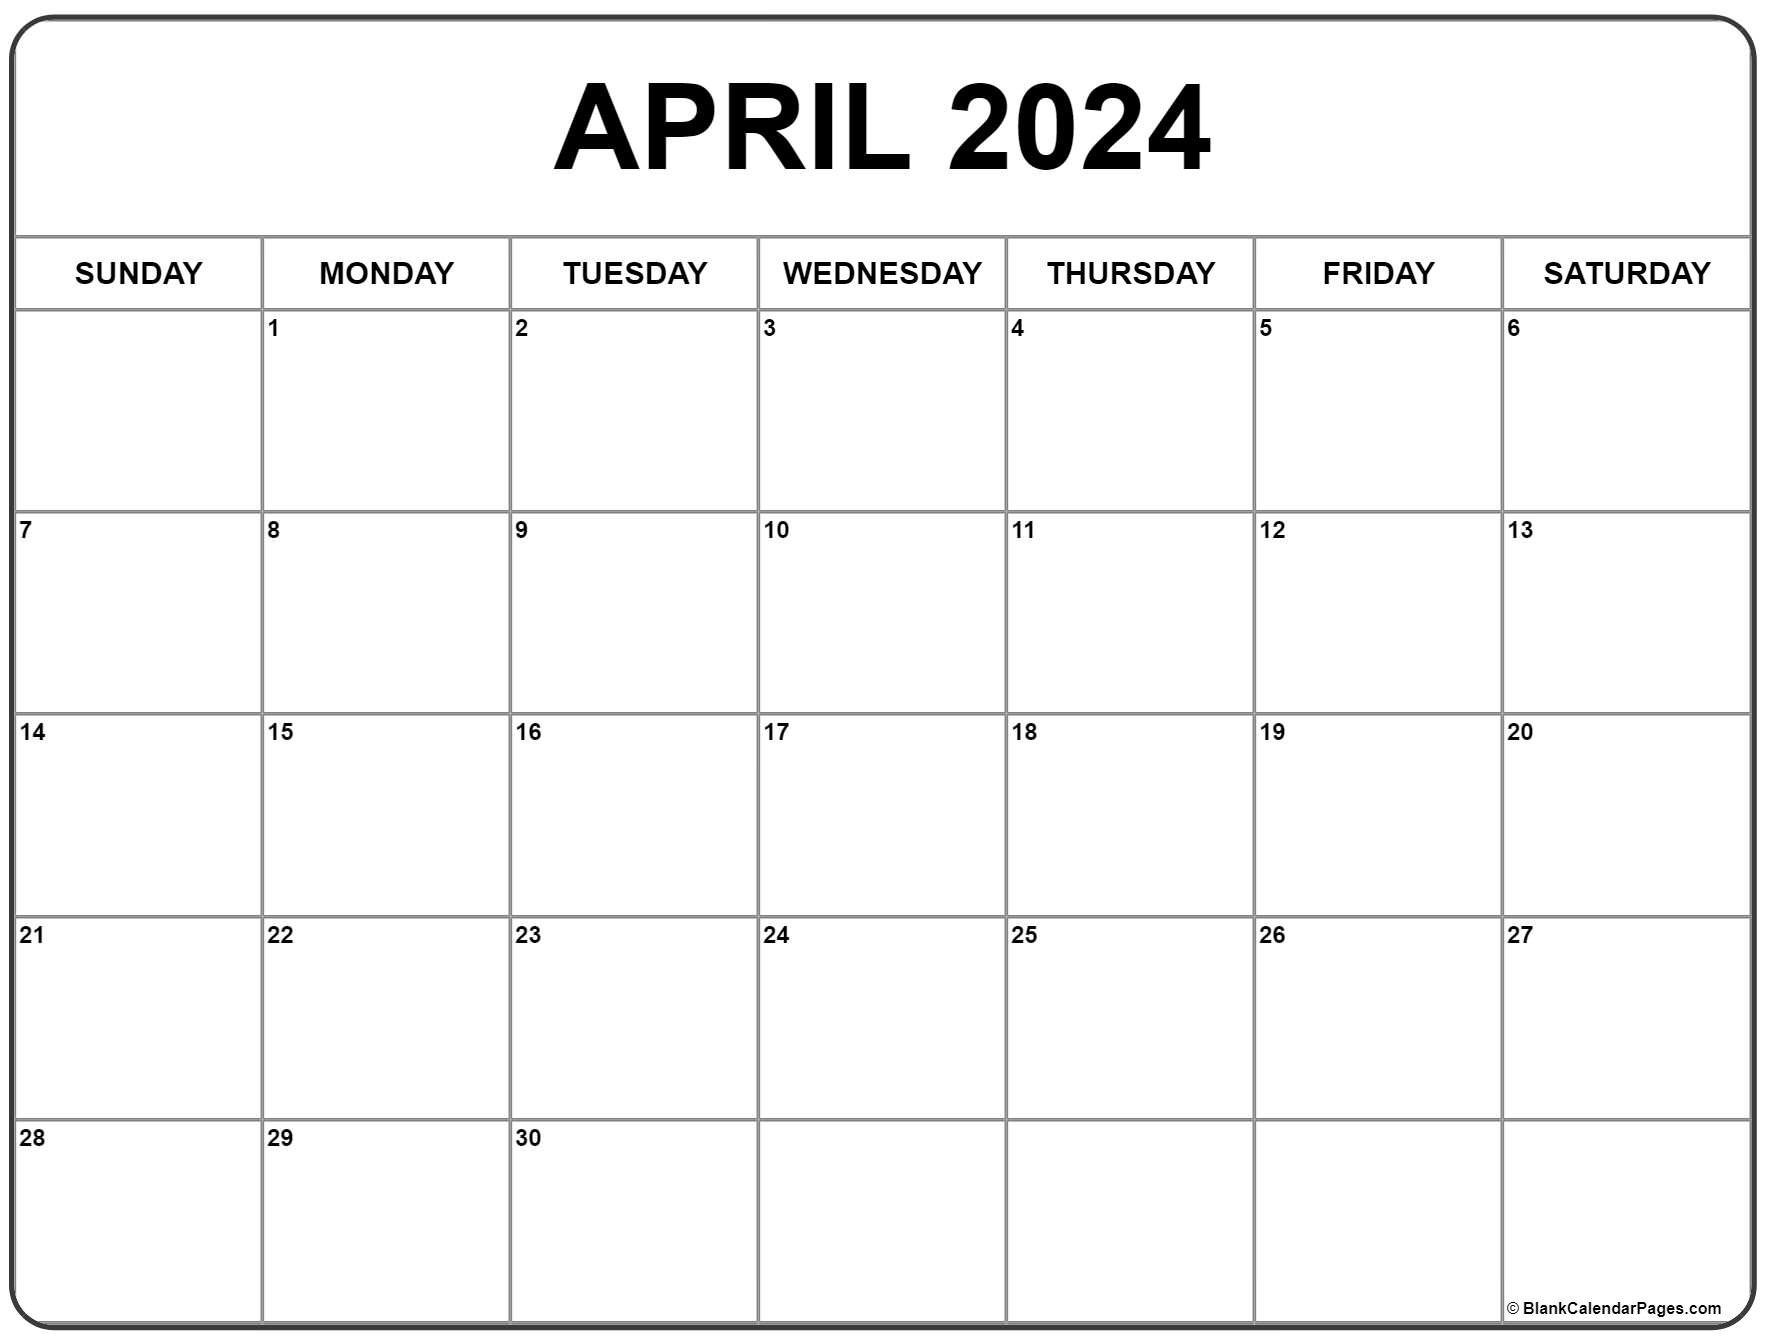 April 2024 Calendar | Free Printable Calendar for Printable Weekly Calendar April 2024